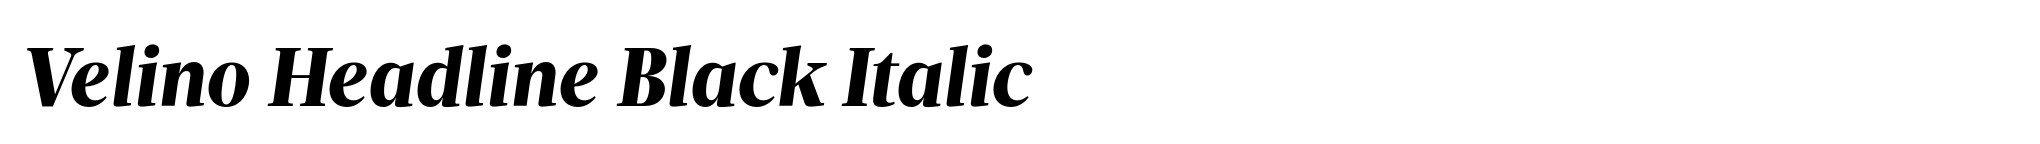 Velino Headline Black Italic image